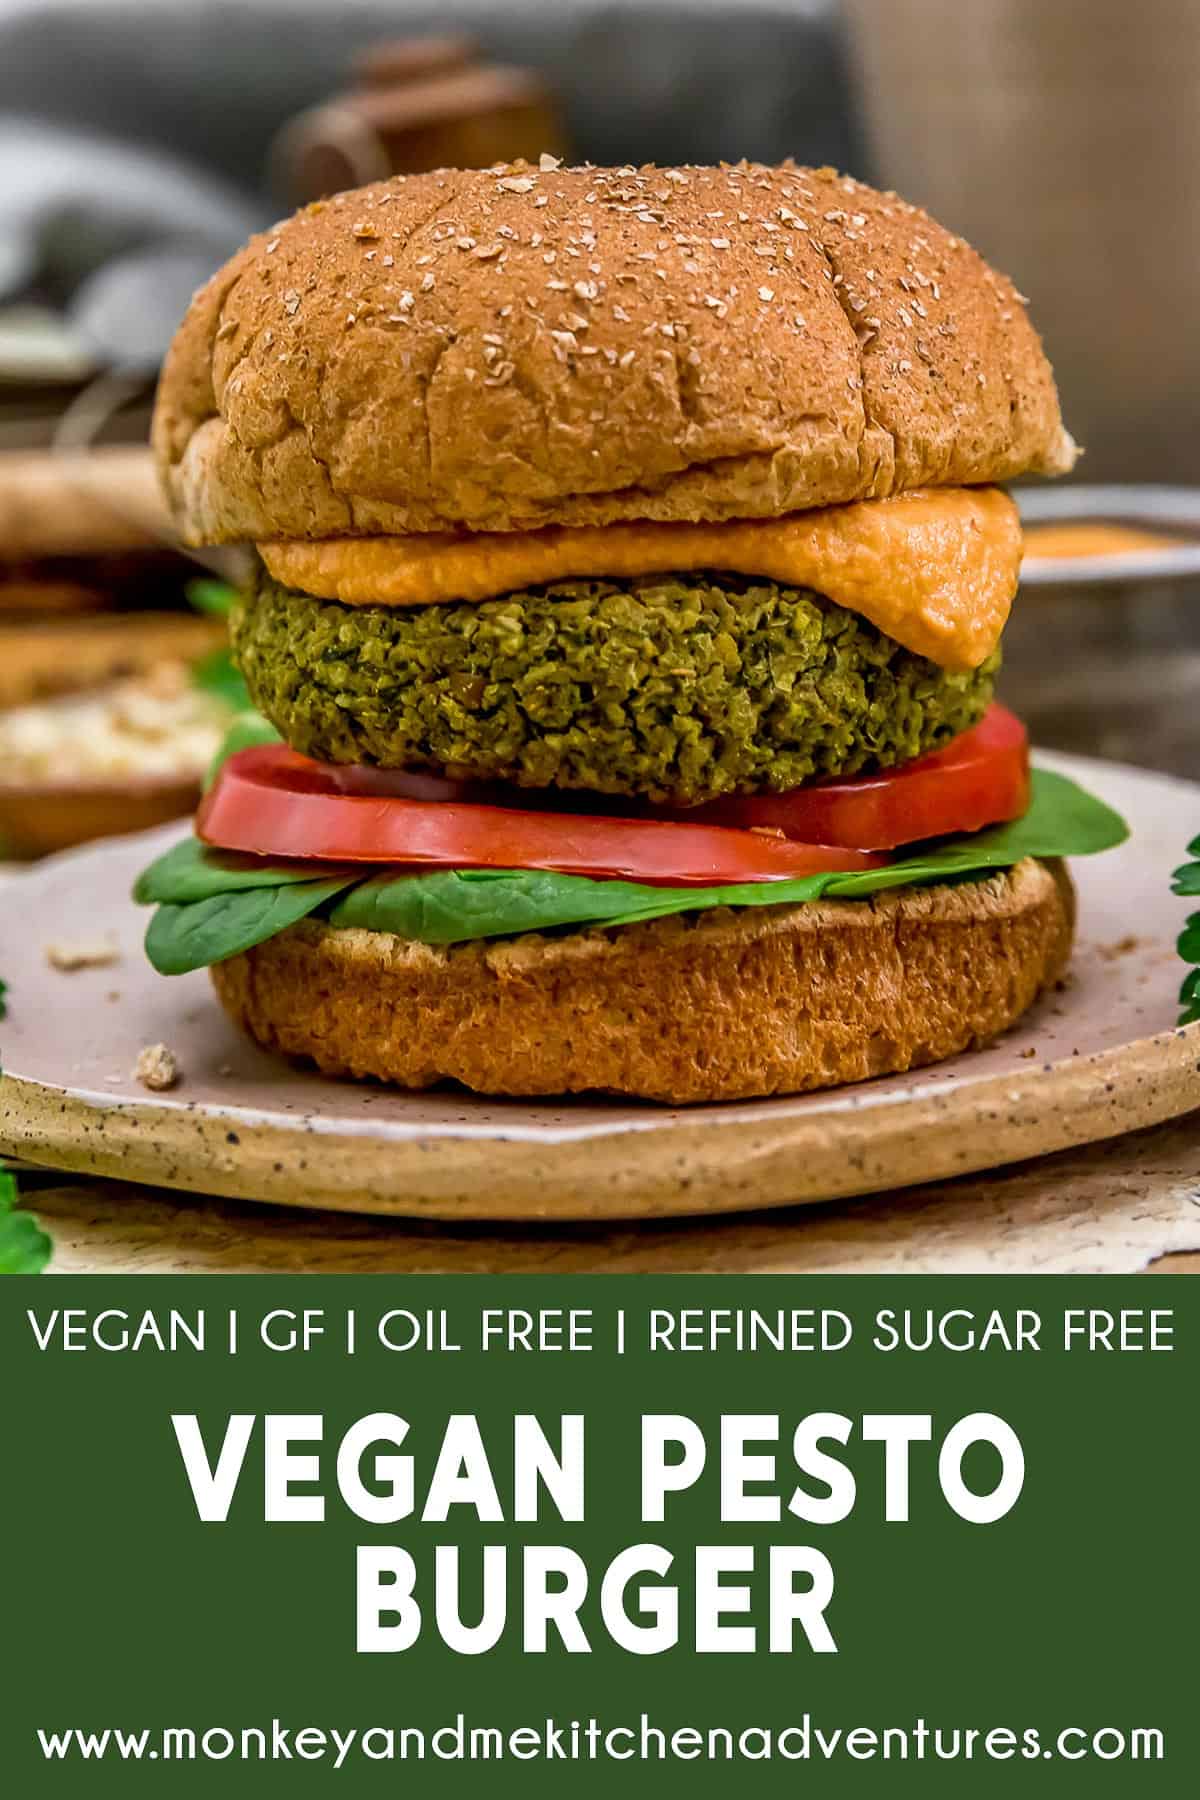 Vegan Pesto Burger with Text Description